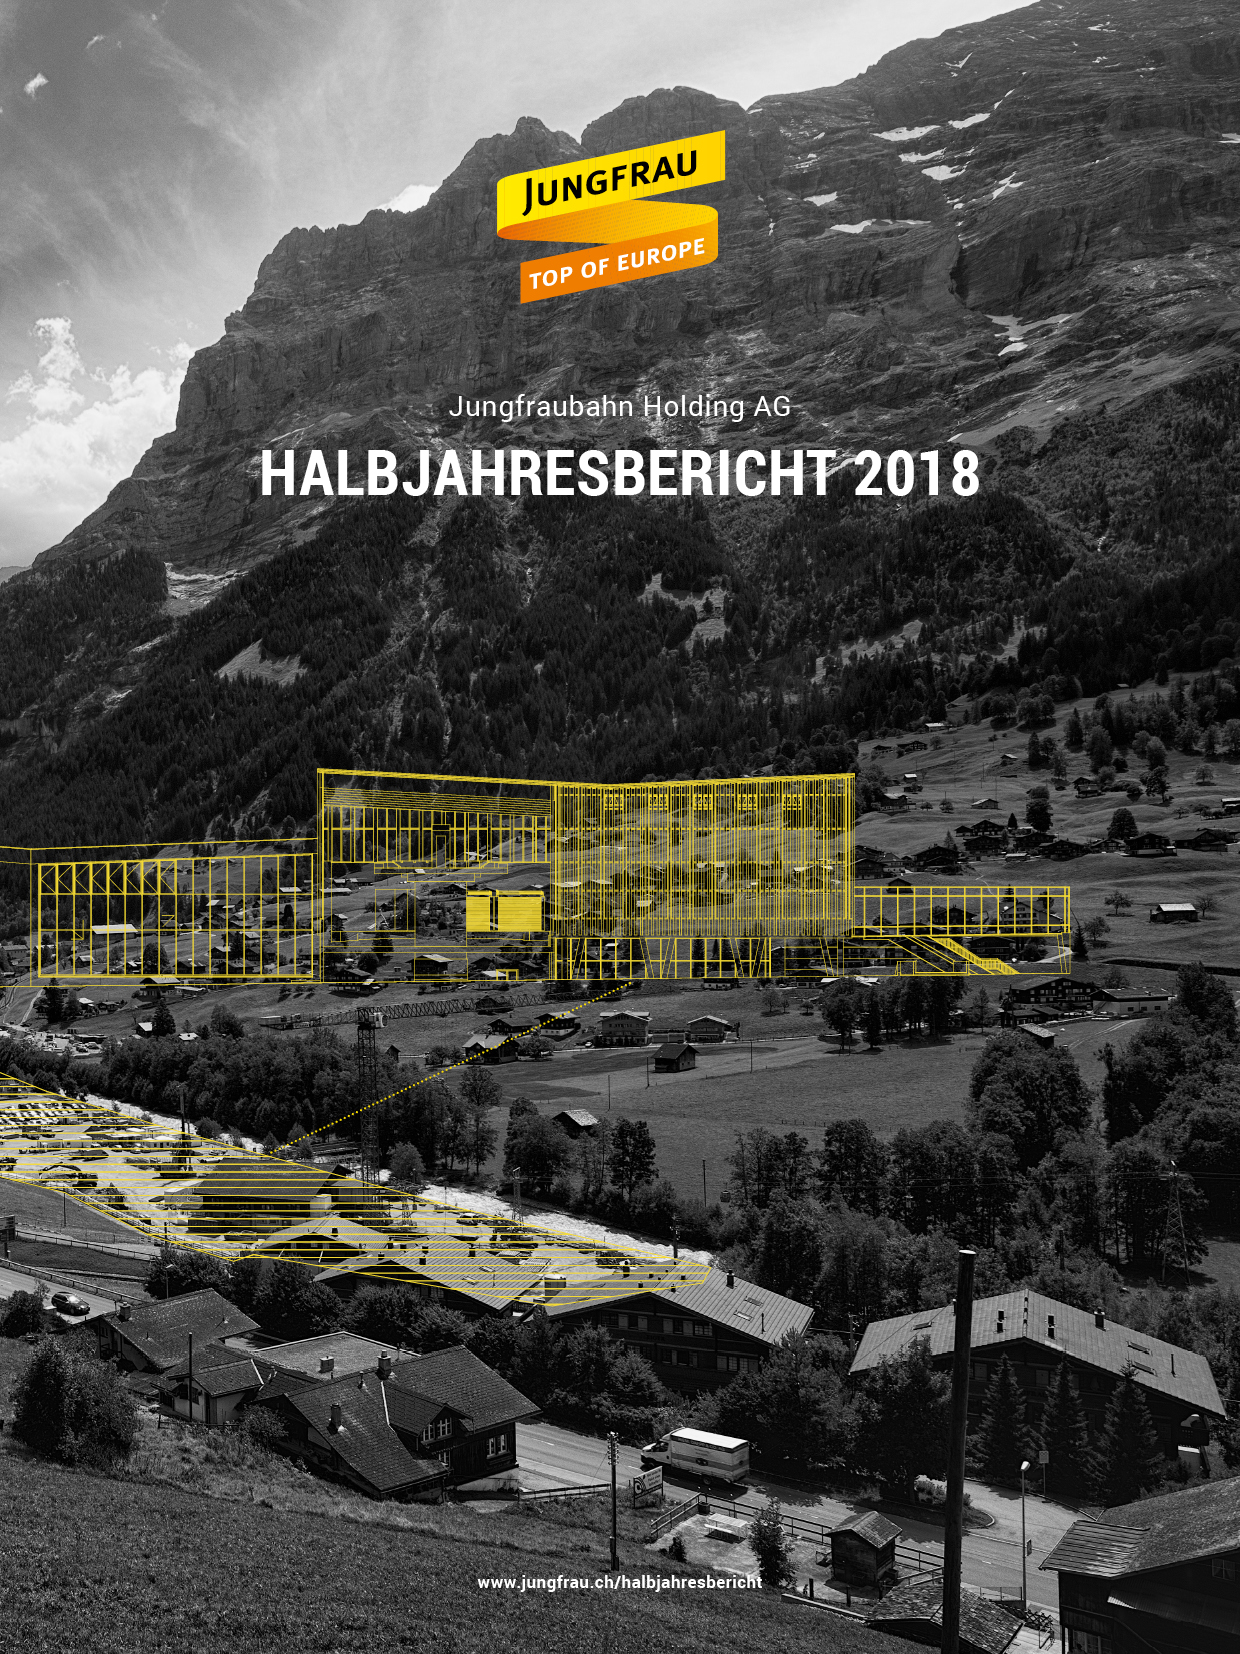 Halbjahresbericht 2018 der Jungfraubahn Holding AG